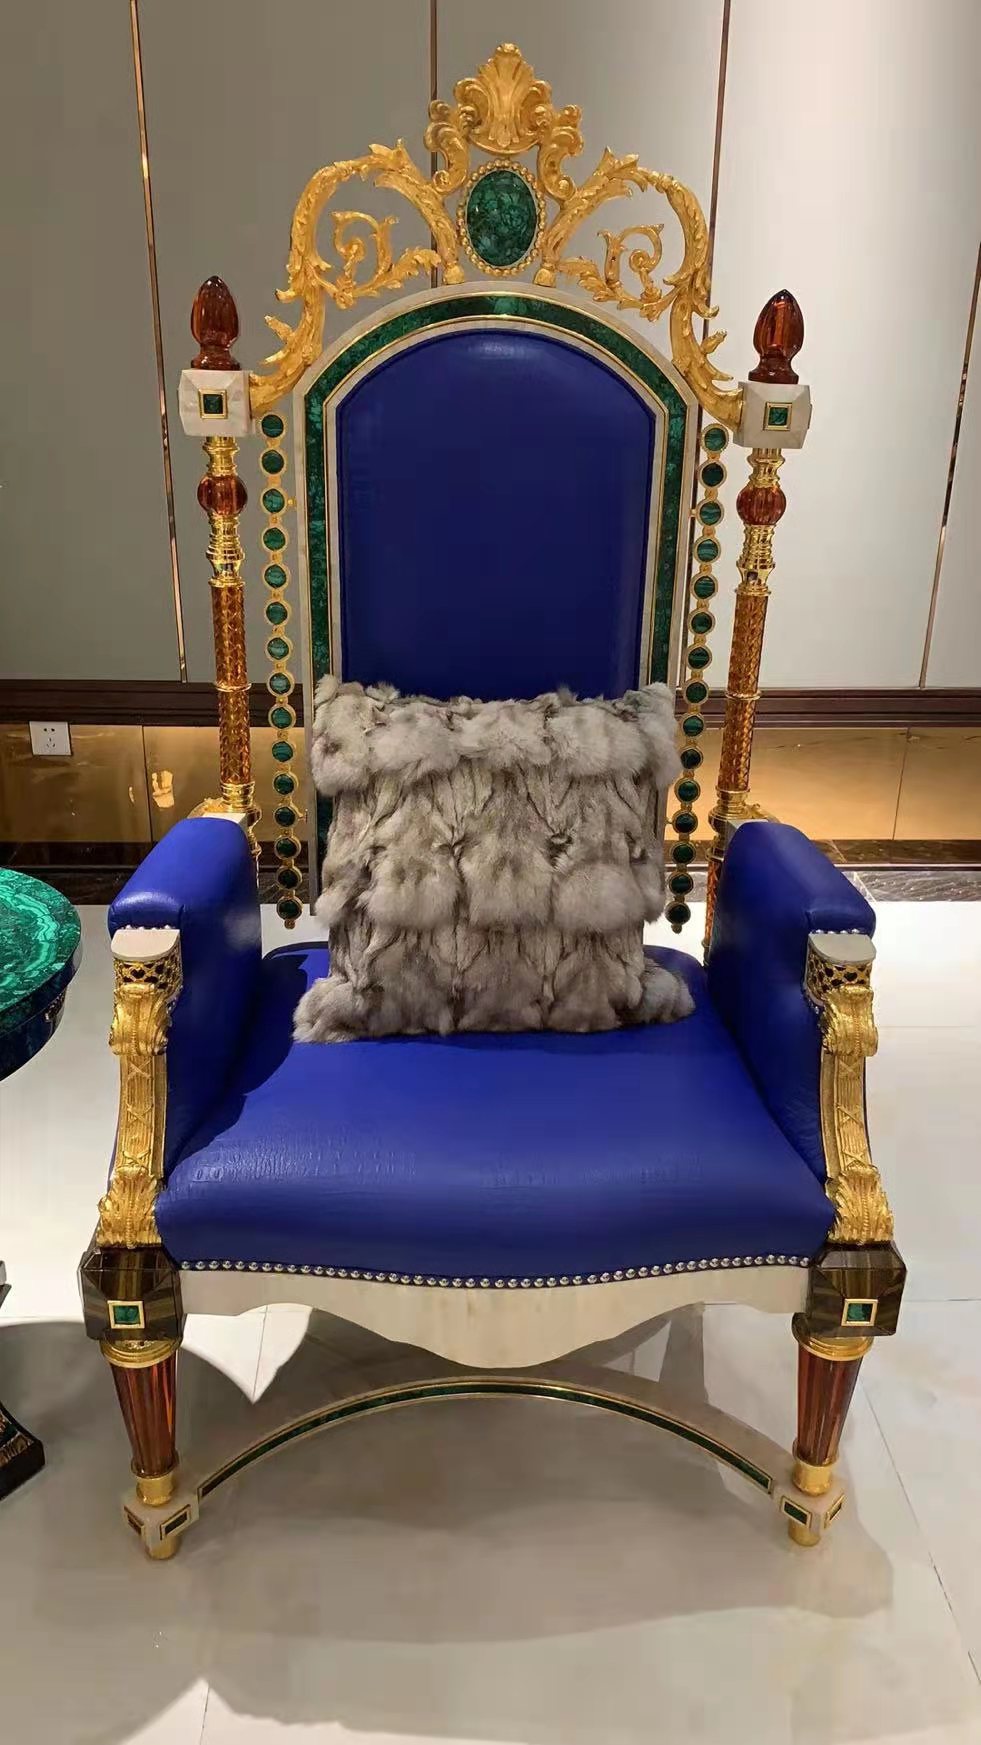 Dubai prince with gemstone chair